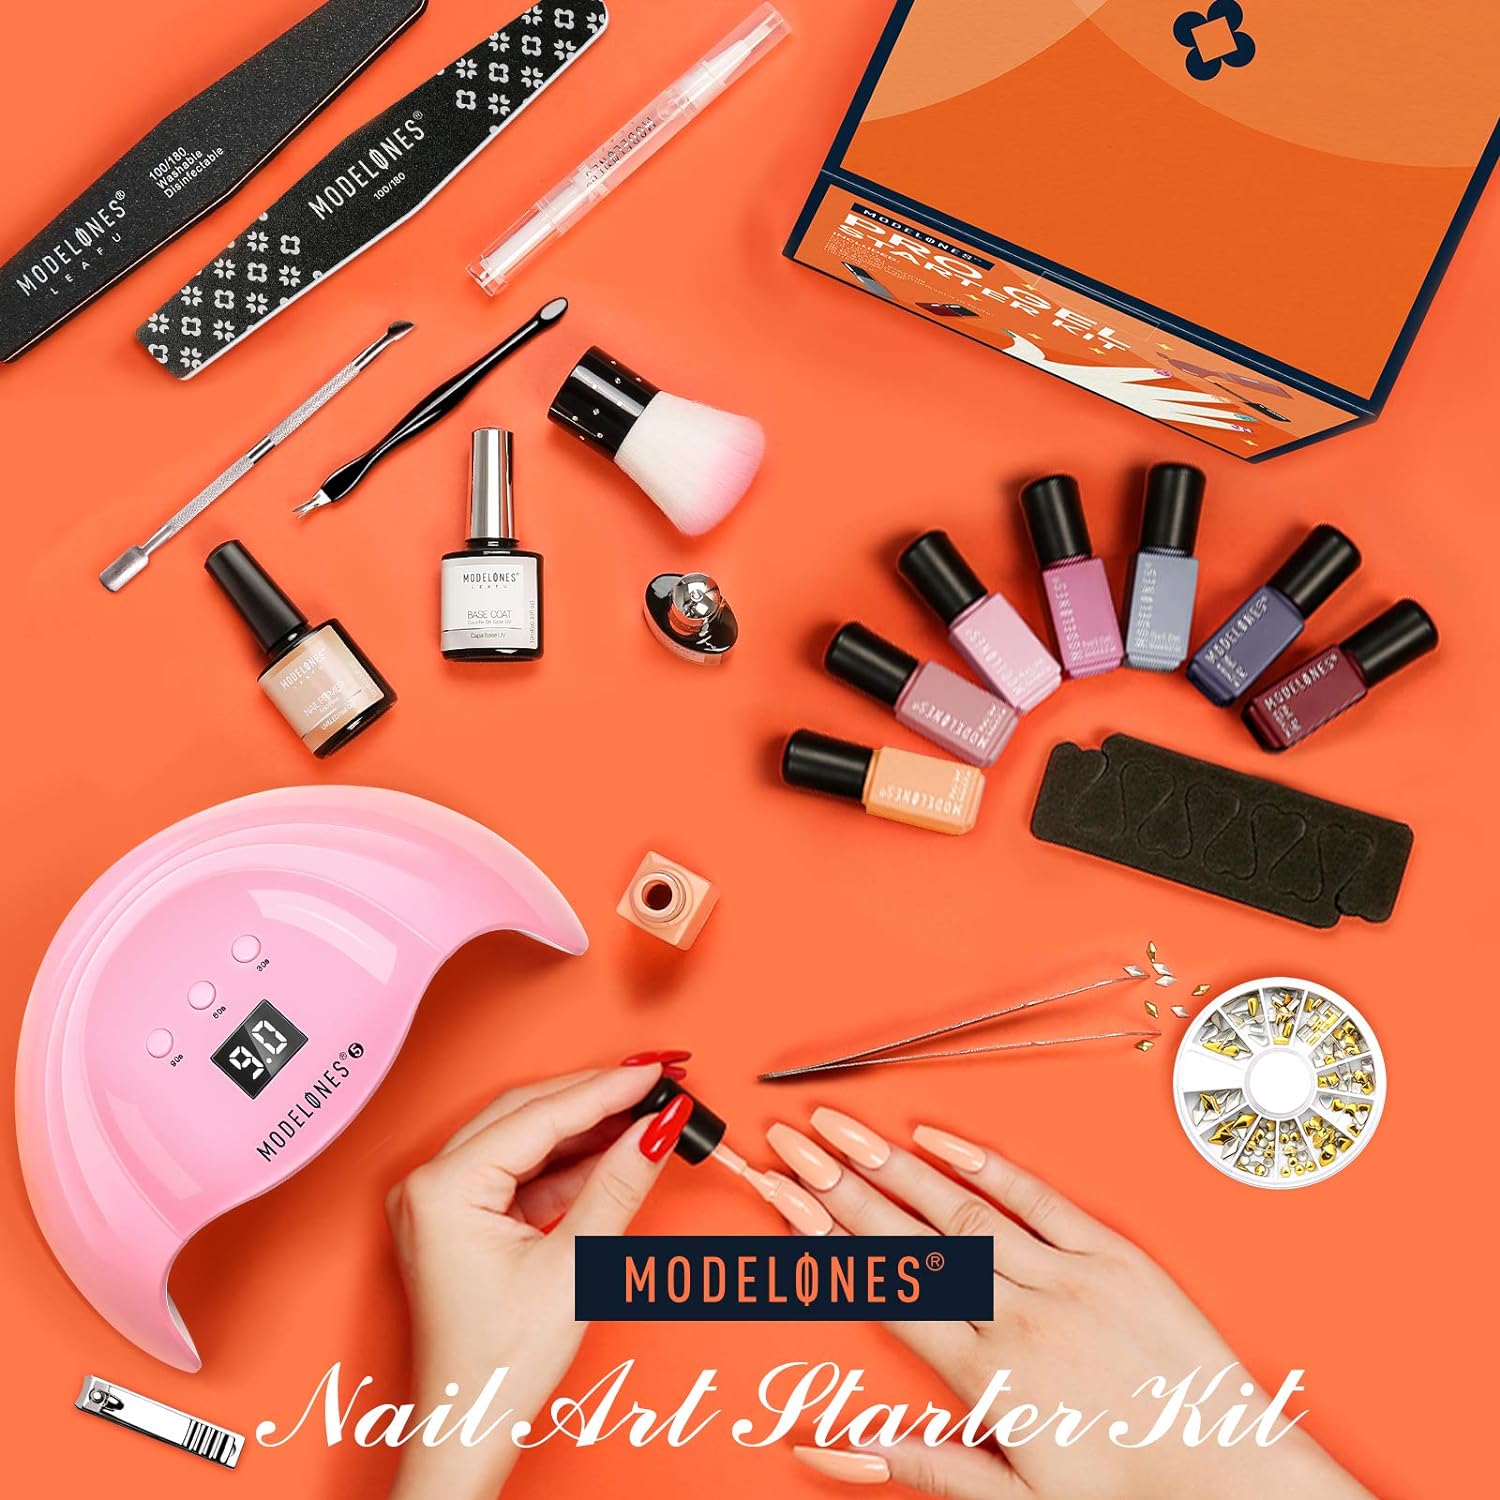  Gel Nail Polish Kit with U V Light 48W LED Nail Lamp Modelones 7 Nude Colors Gel Nail Polish Set, No Wipe Base Top Coat, Nail Primer, Nail Art Decorations, Manicure Tools, Integrat